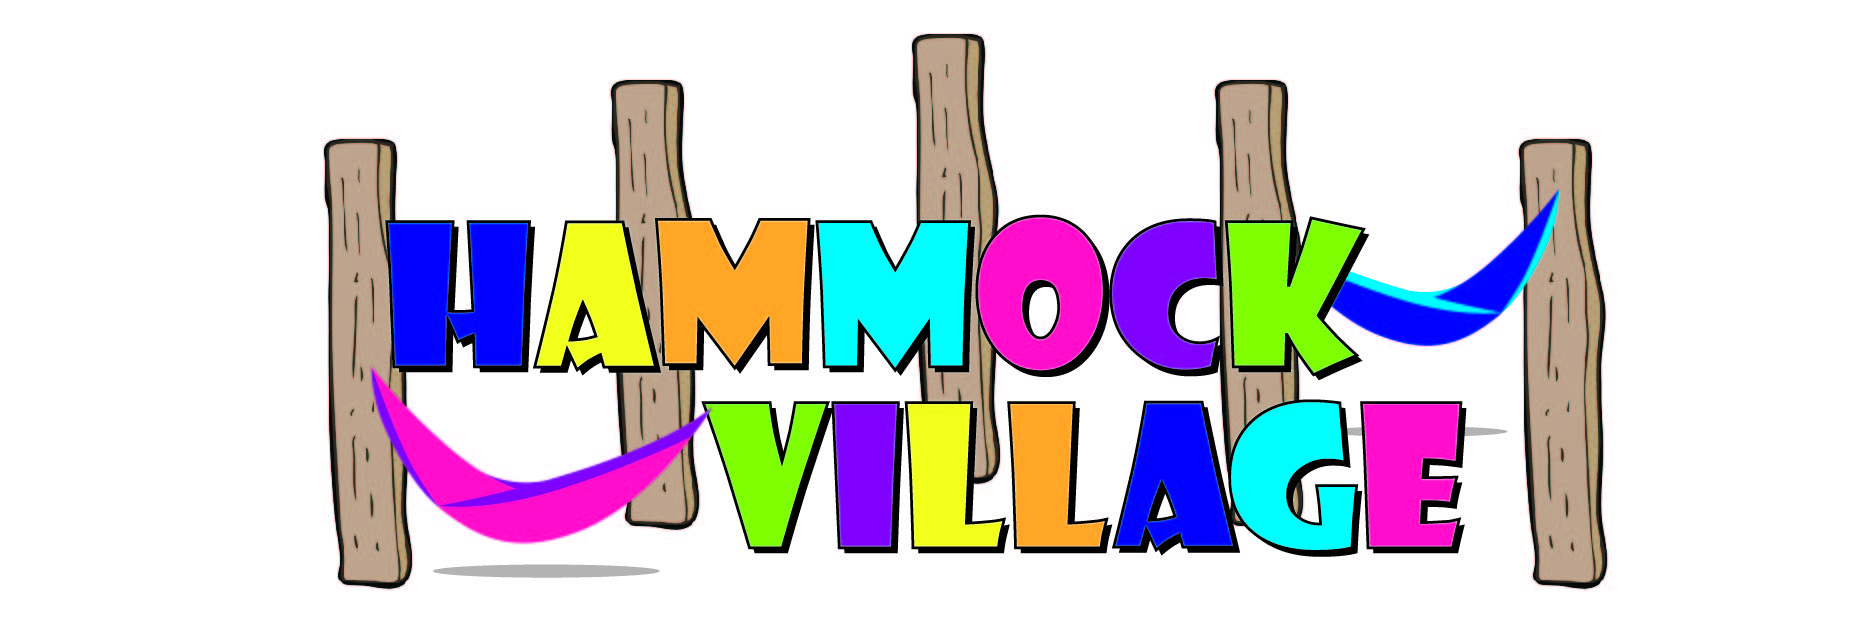 It Takes a Village to Build a Hammock Village